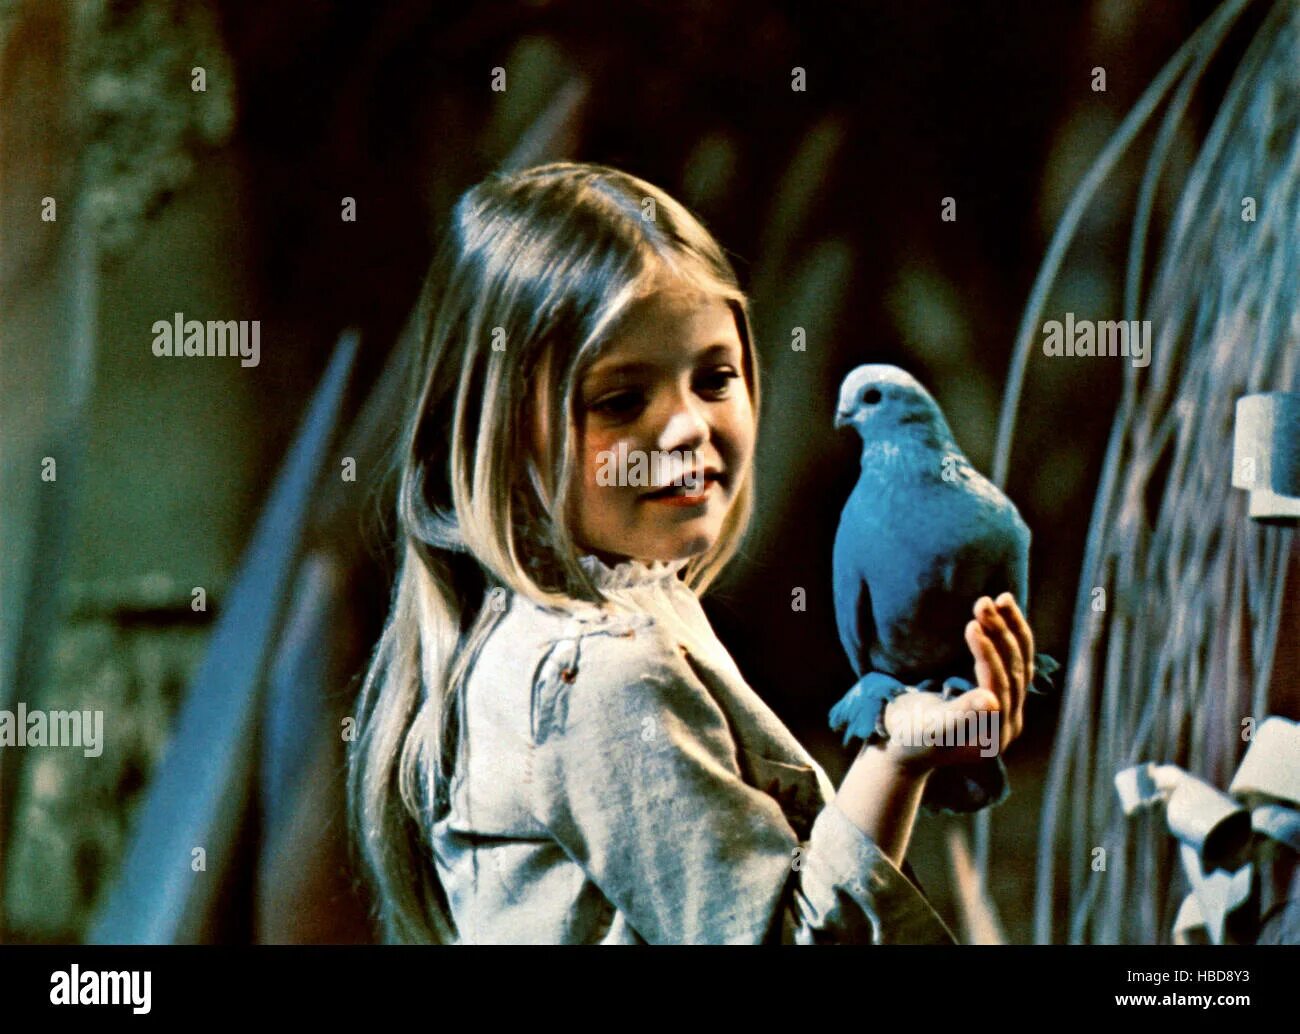 Элизабет Тейлор синяя птица. Джейн фонда синяя птица.